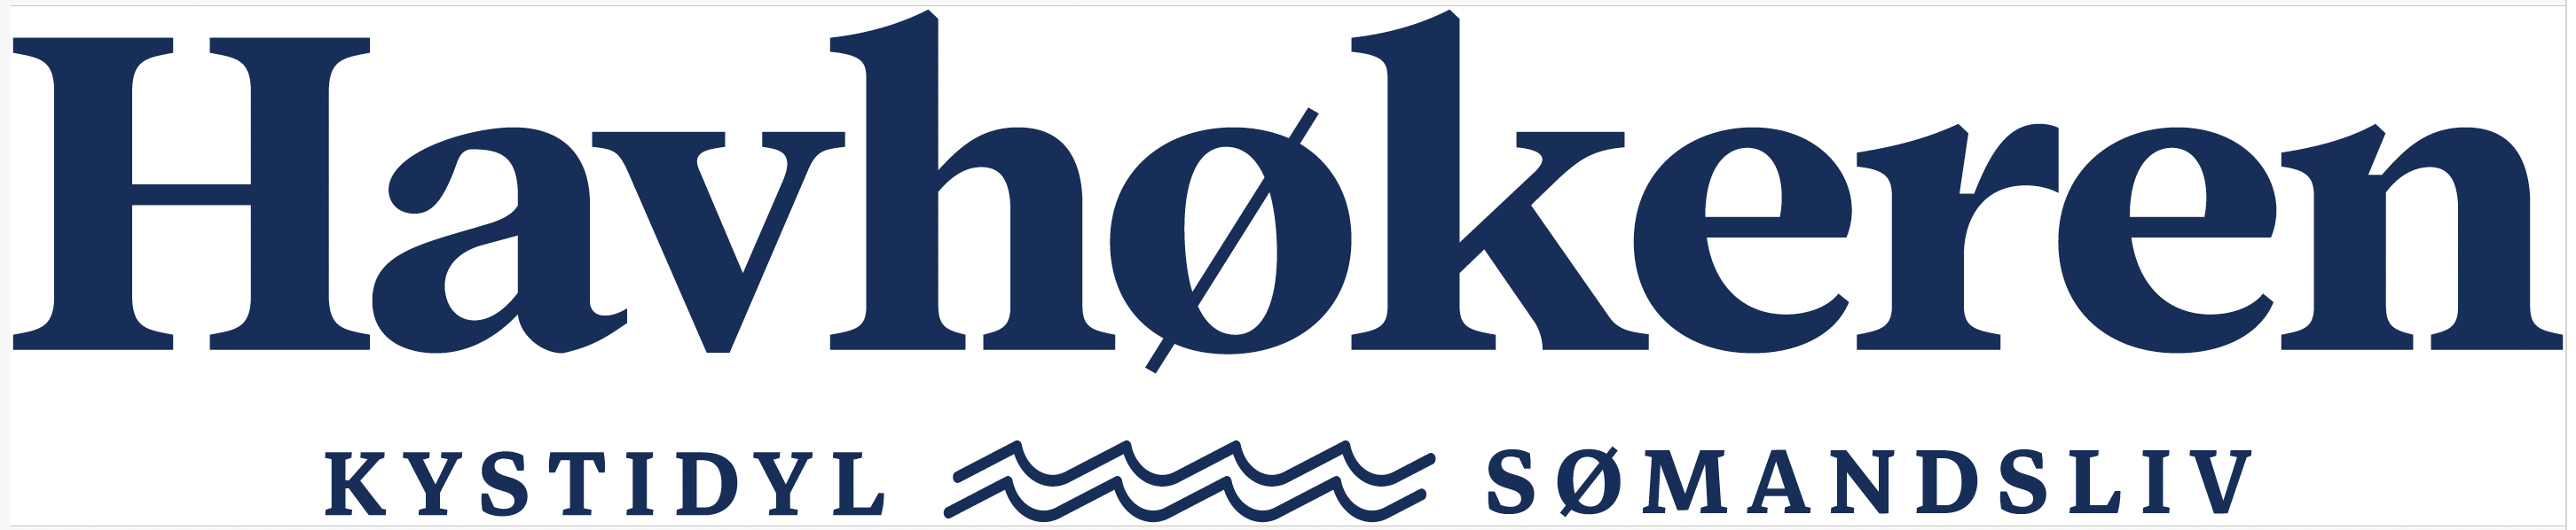 Havhokeren - logo